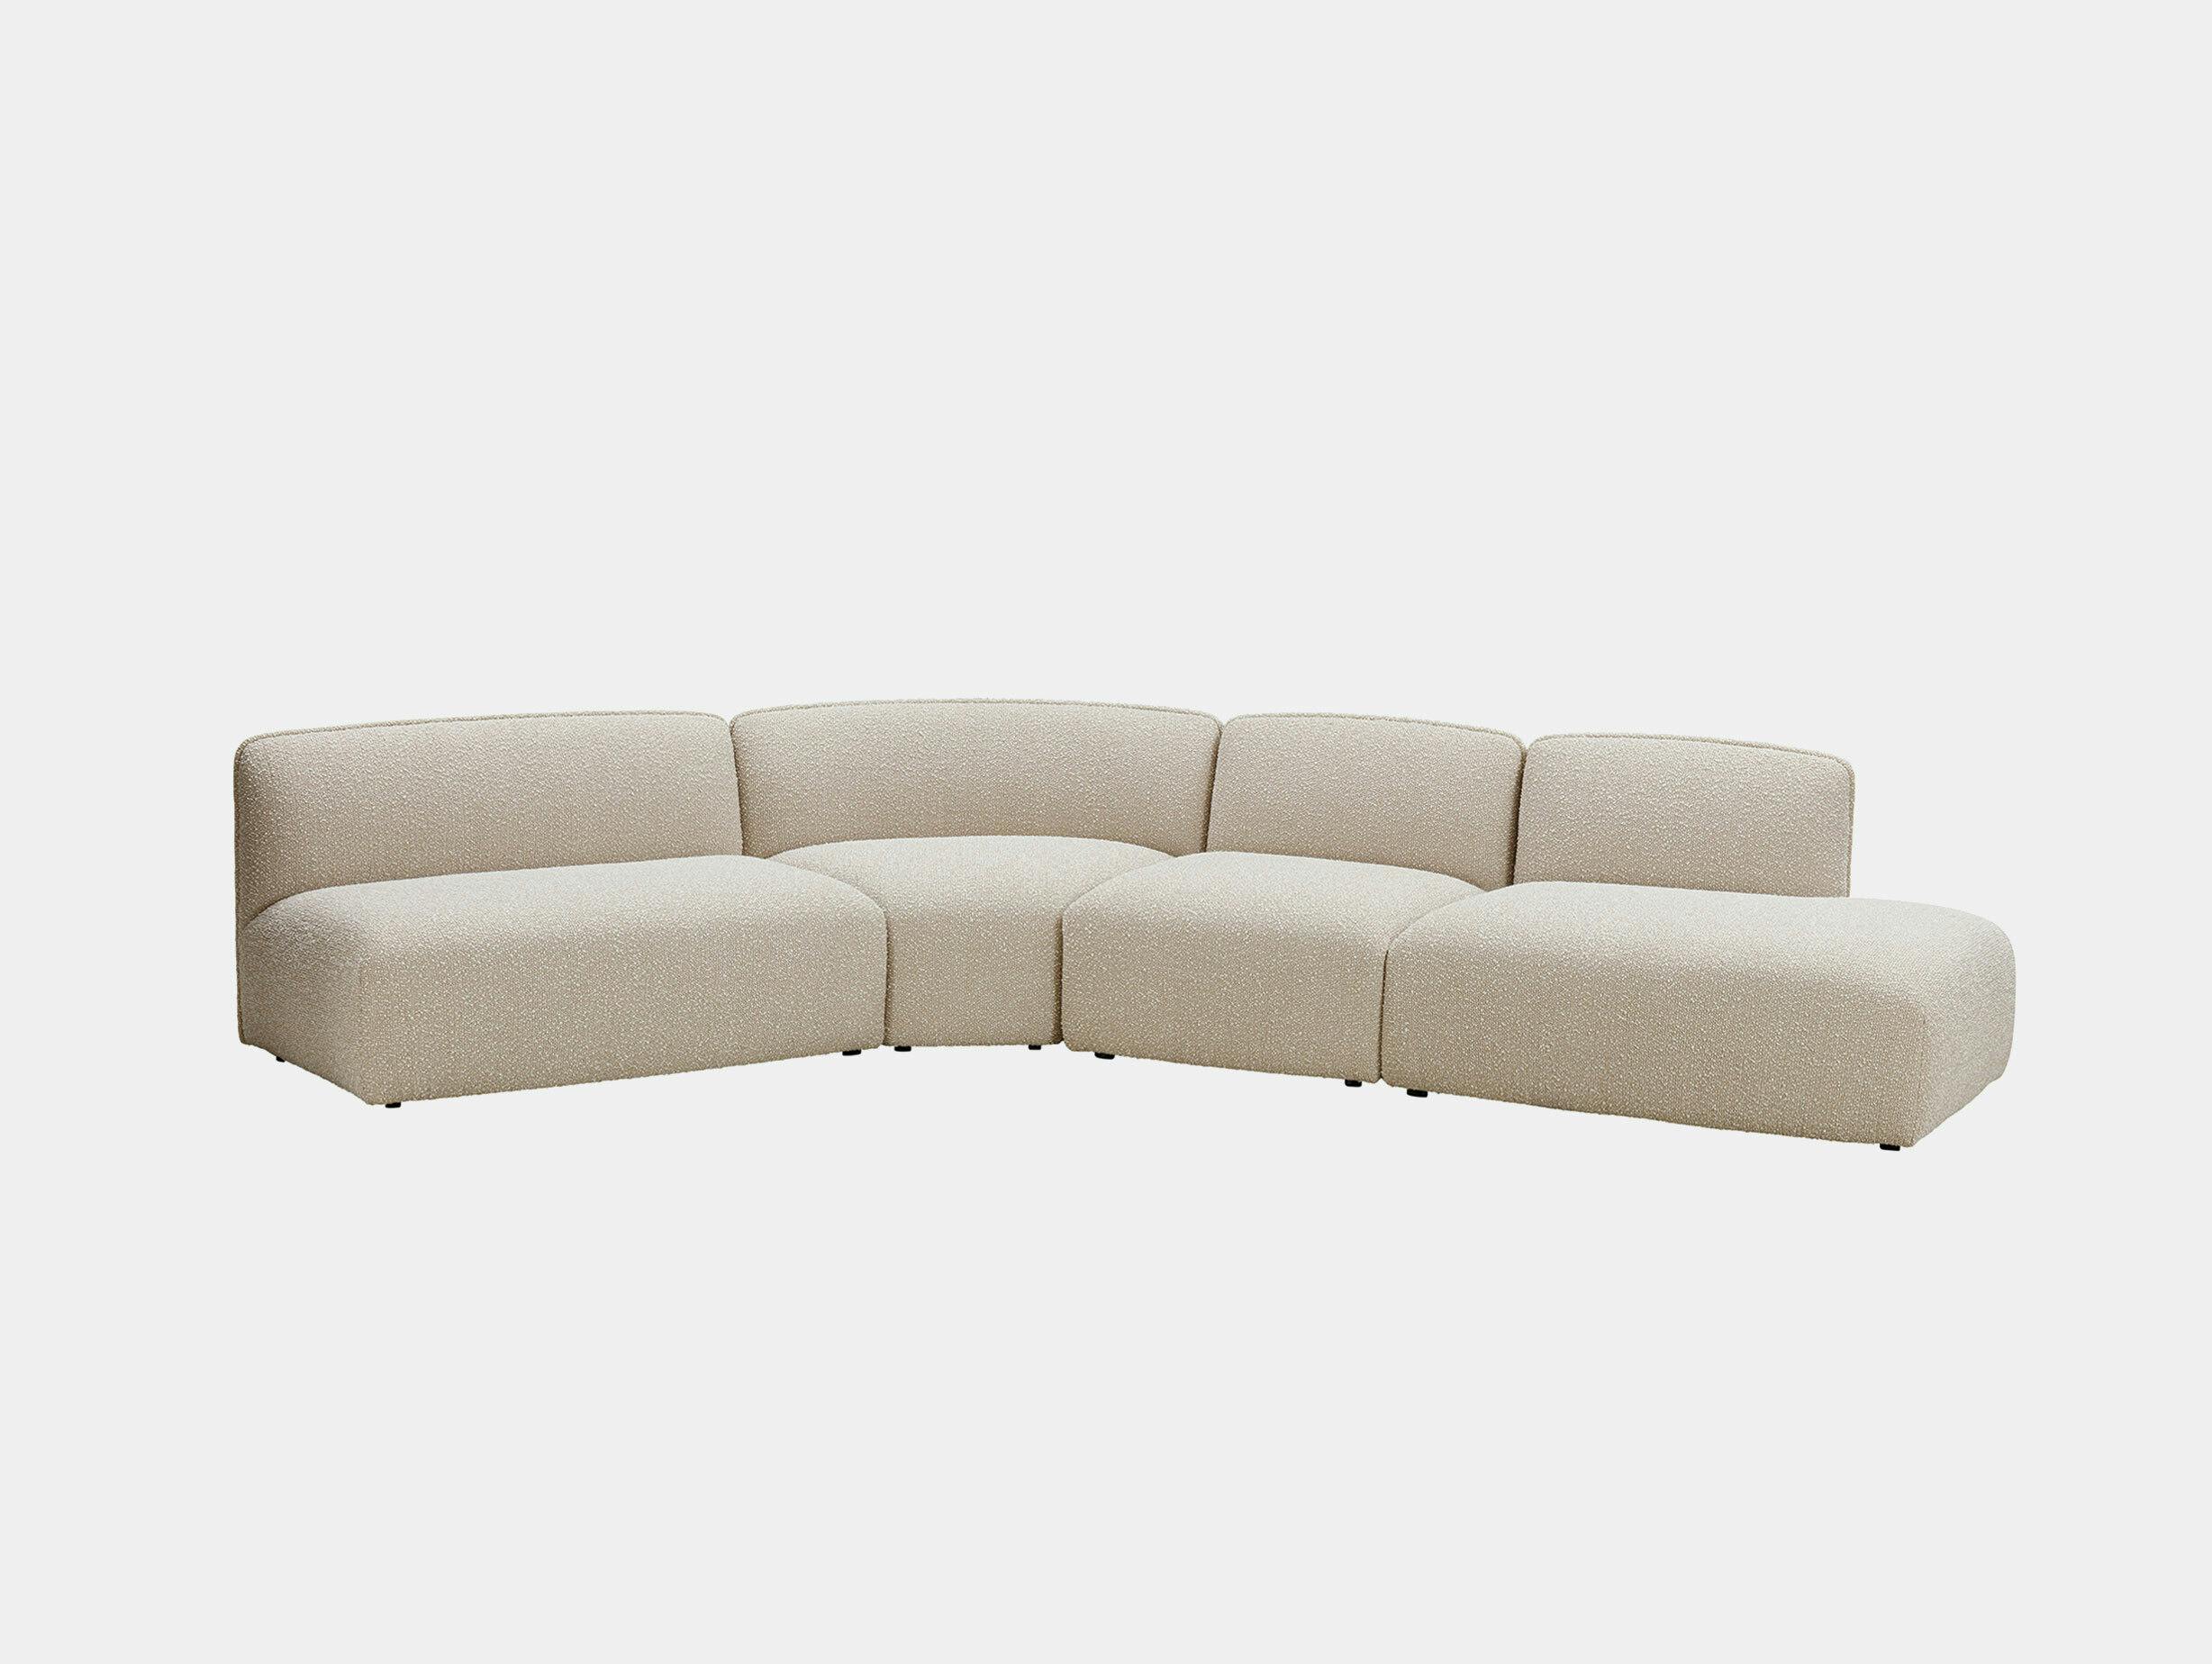 Wendelbo jonas wagell panorama sofa configuration 1 cuddle col 04